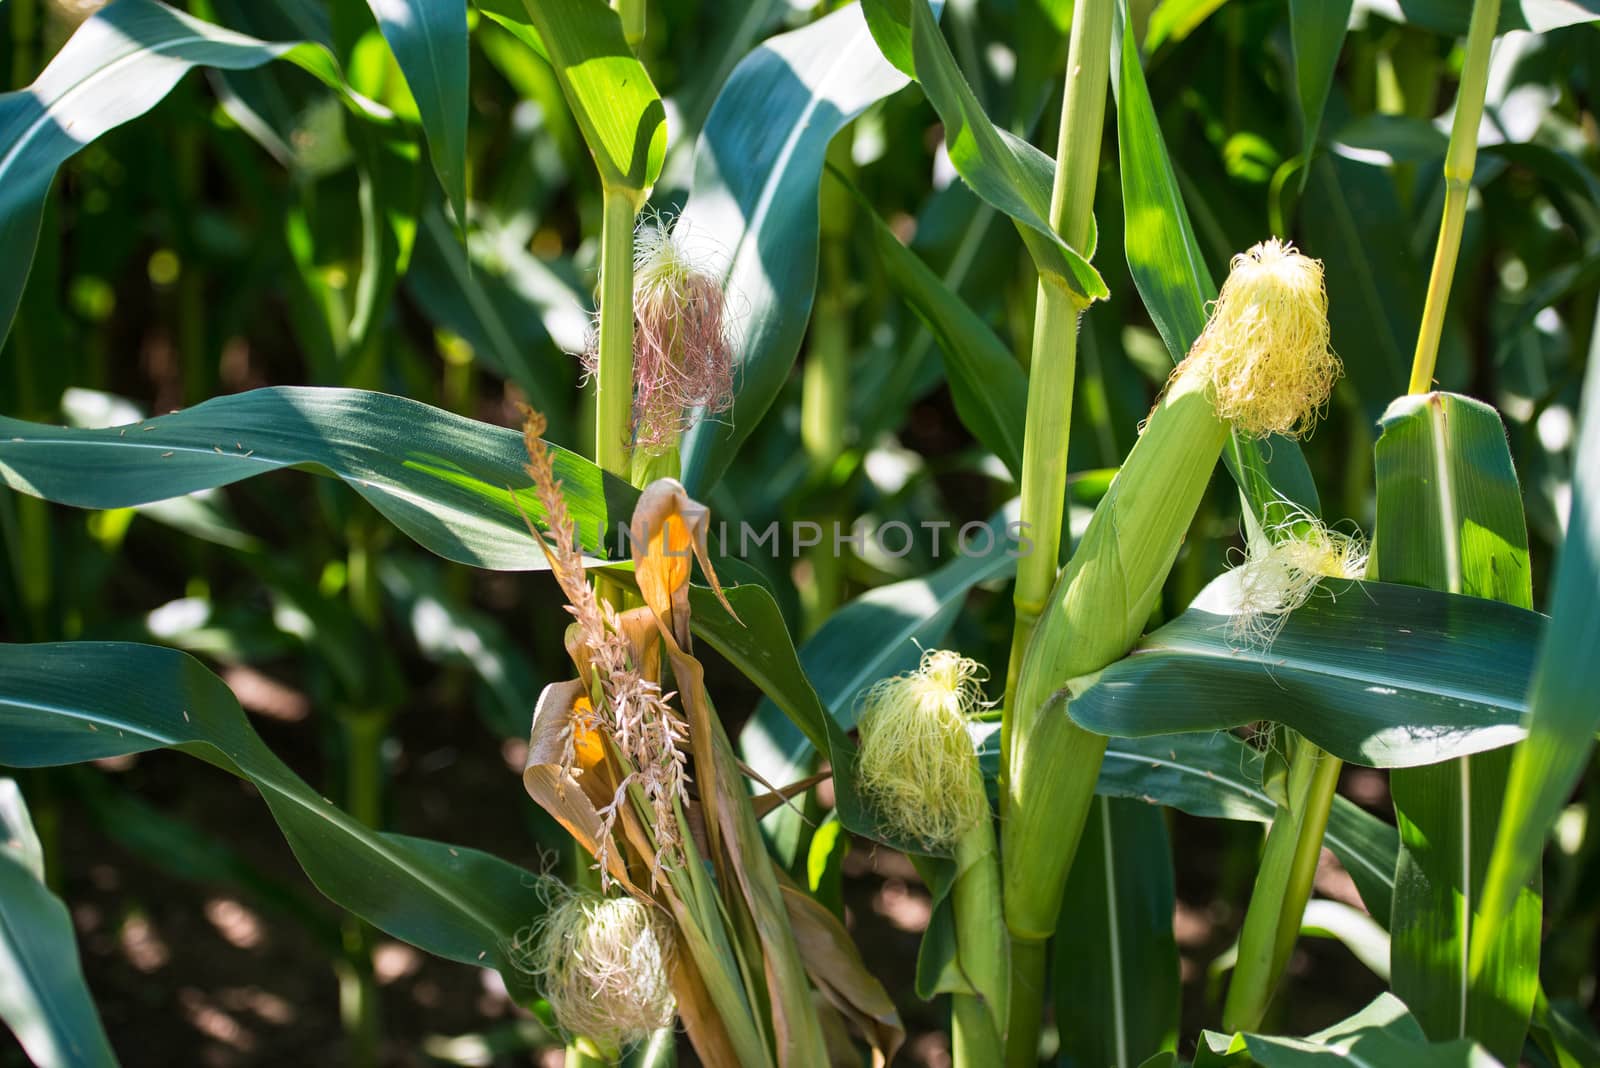 corn cob on a field in summer